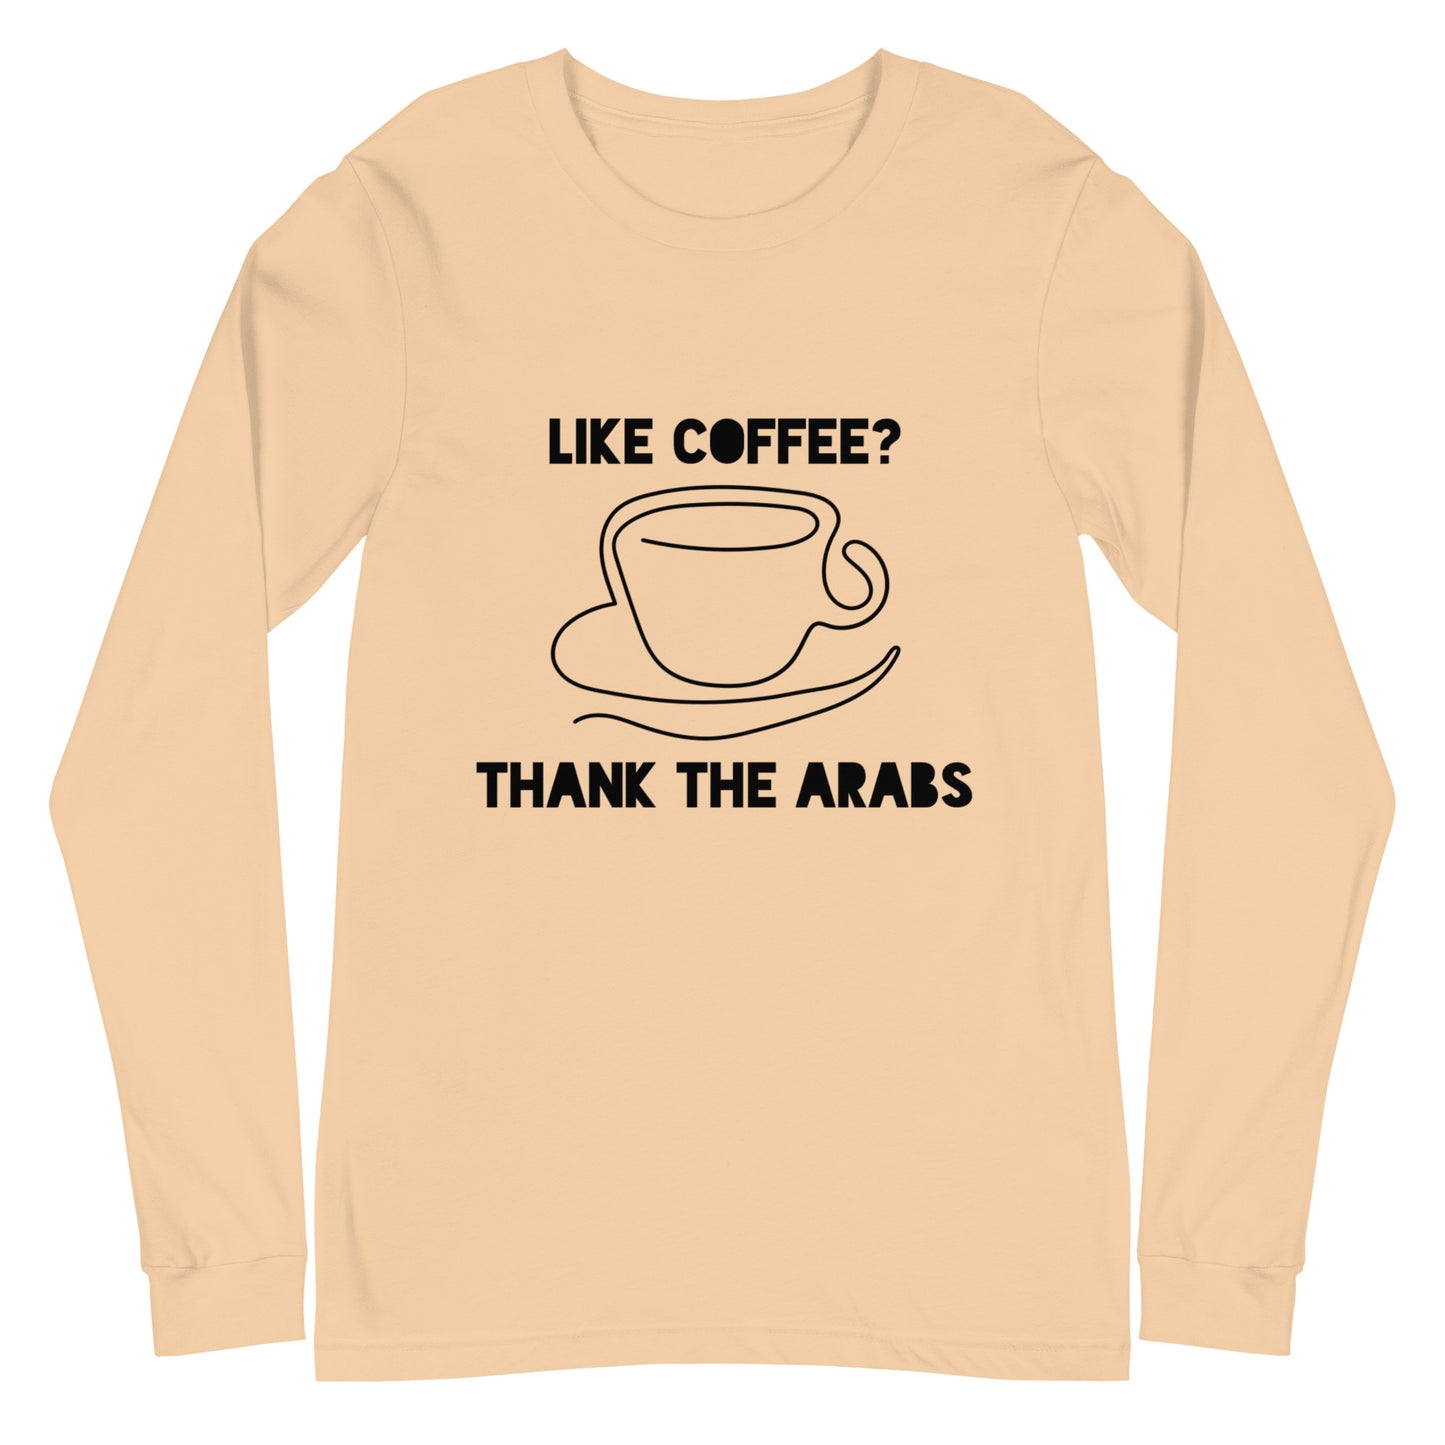 Like coffee? Thank the Arabs - Unisex Long Sleeve Tee